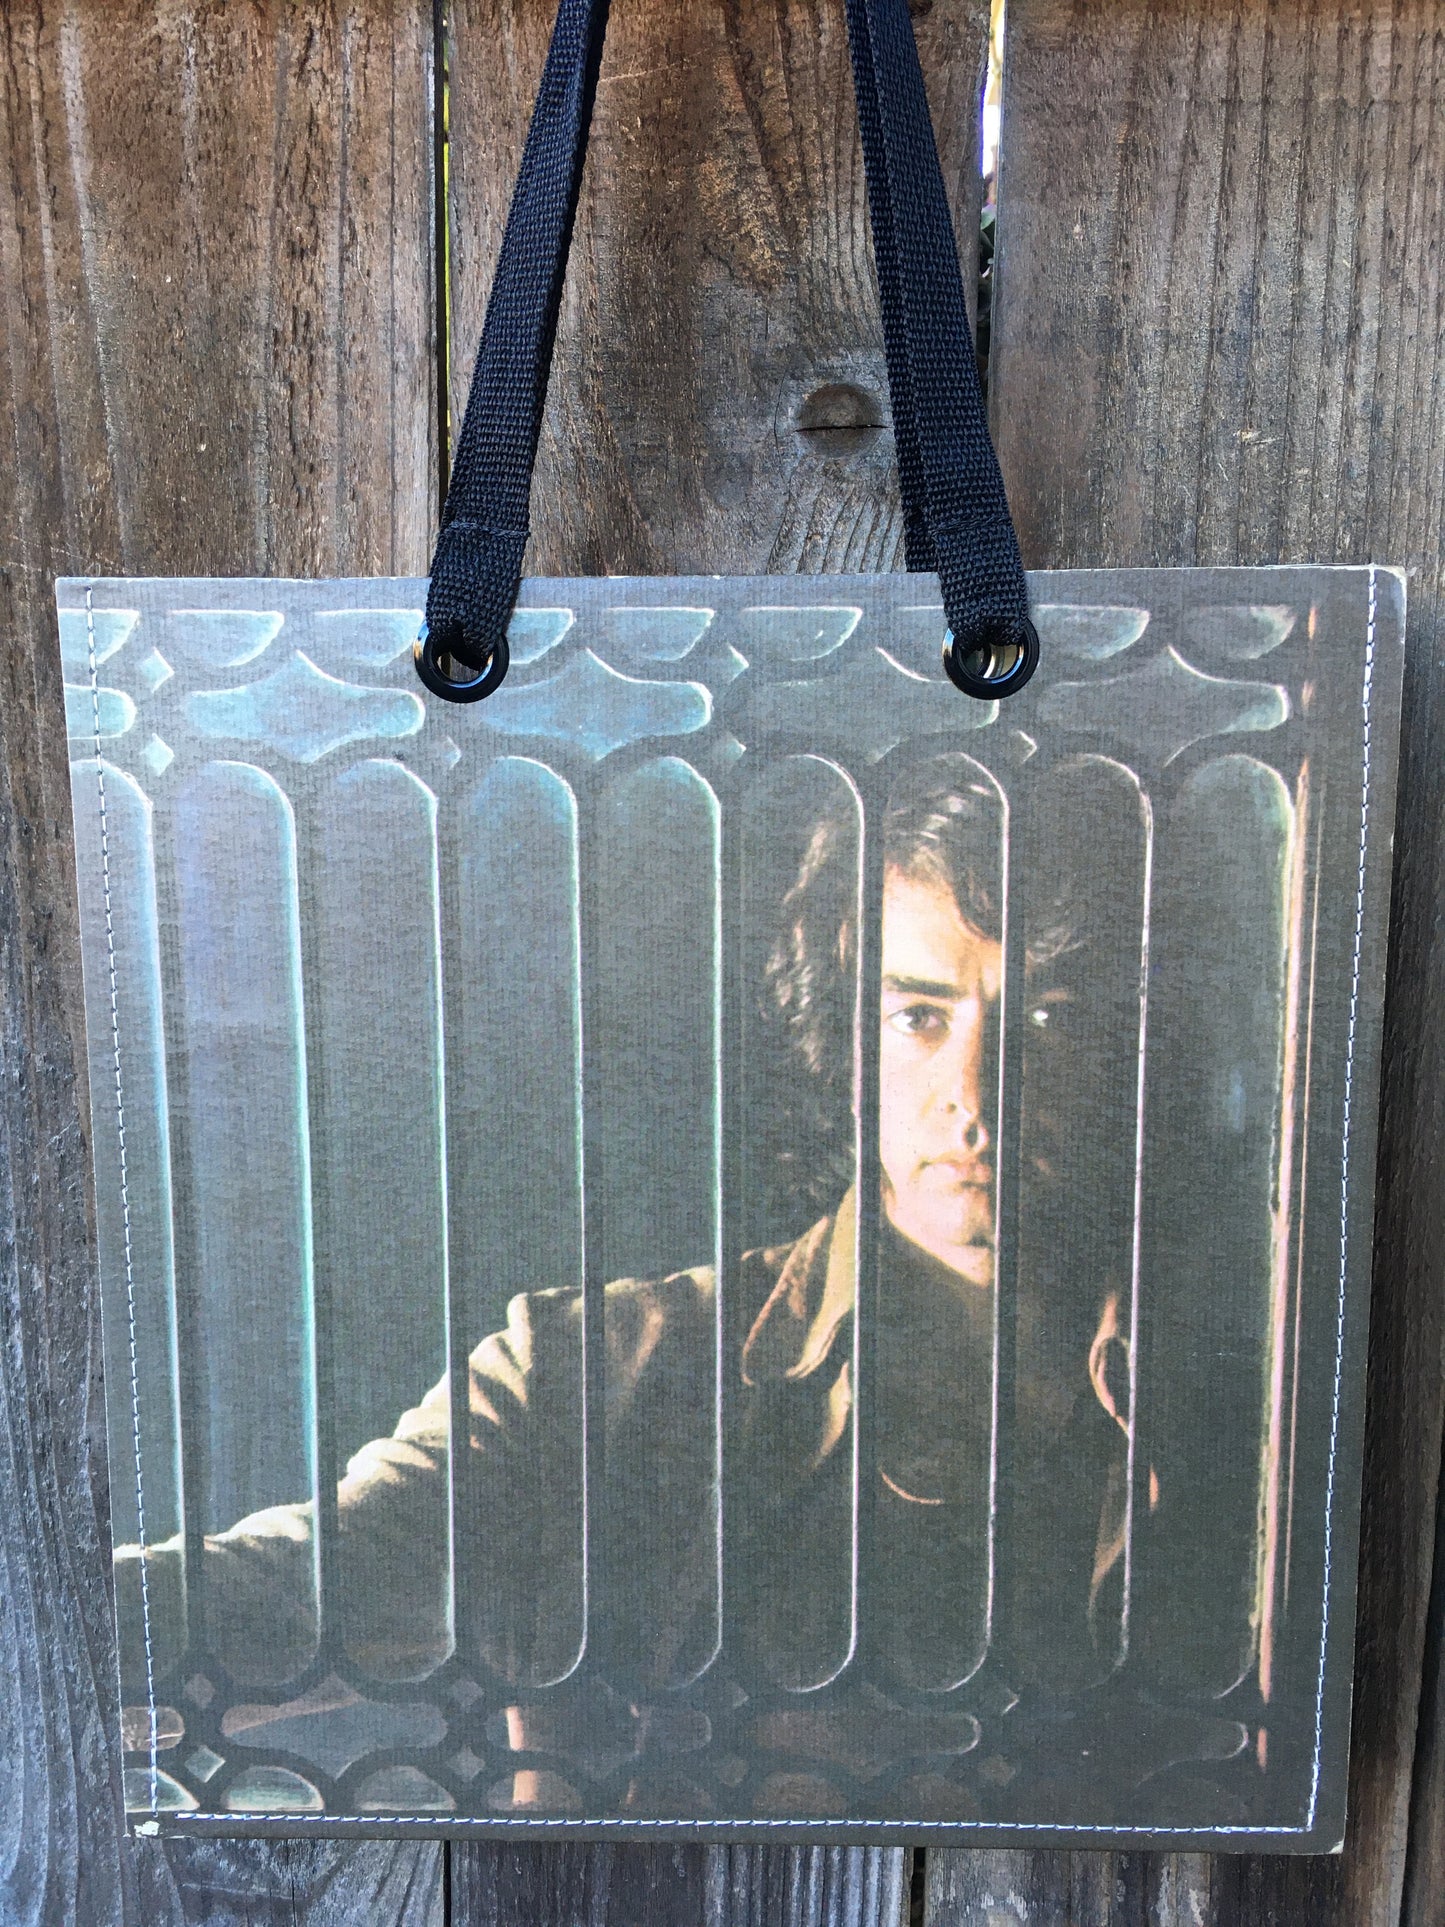 Album Tote Bag - Neil Diamond